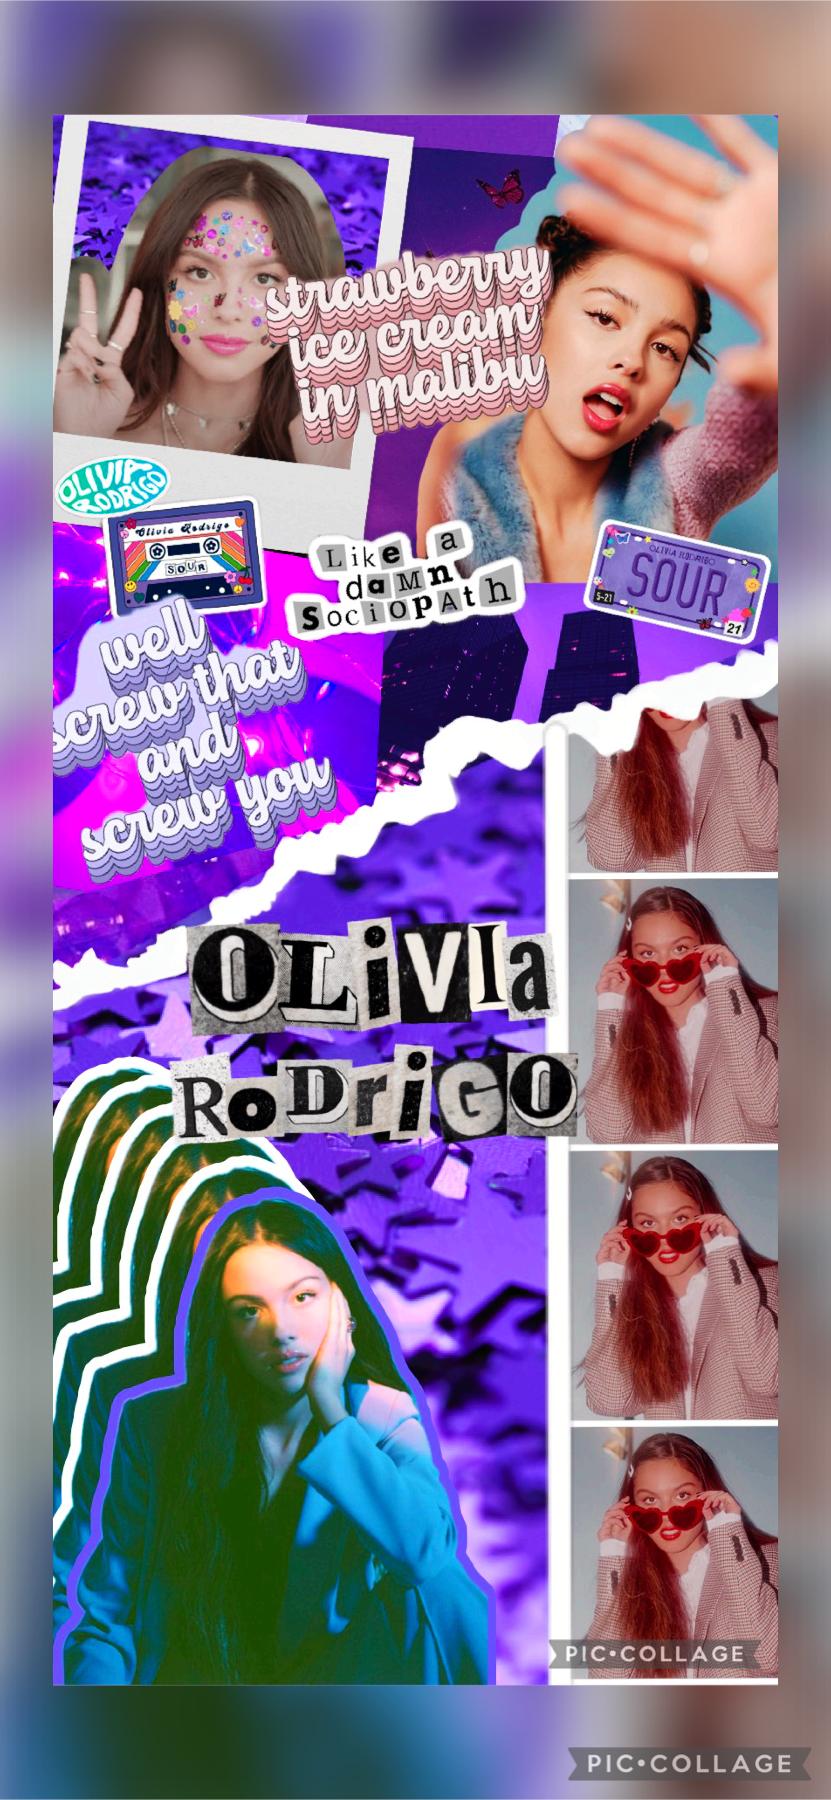 Olivia Rodrigo! 💜☮️
QOTD: What’s ur fav Olivia Rodrigo song/album??
